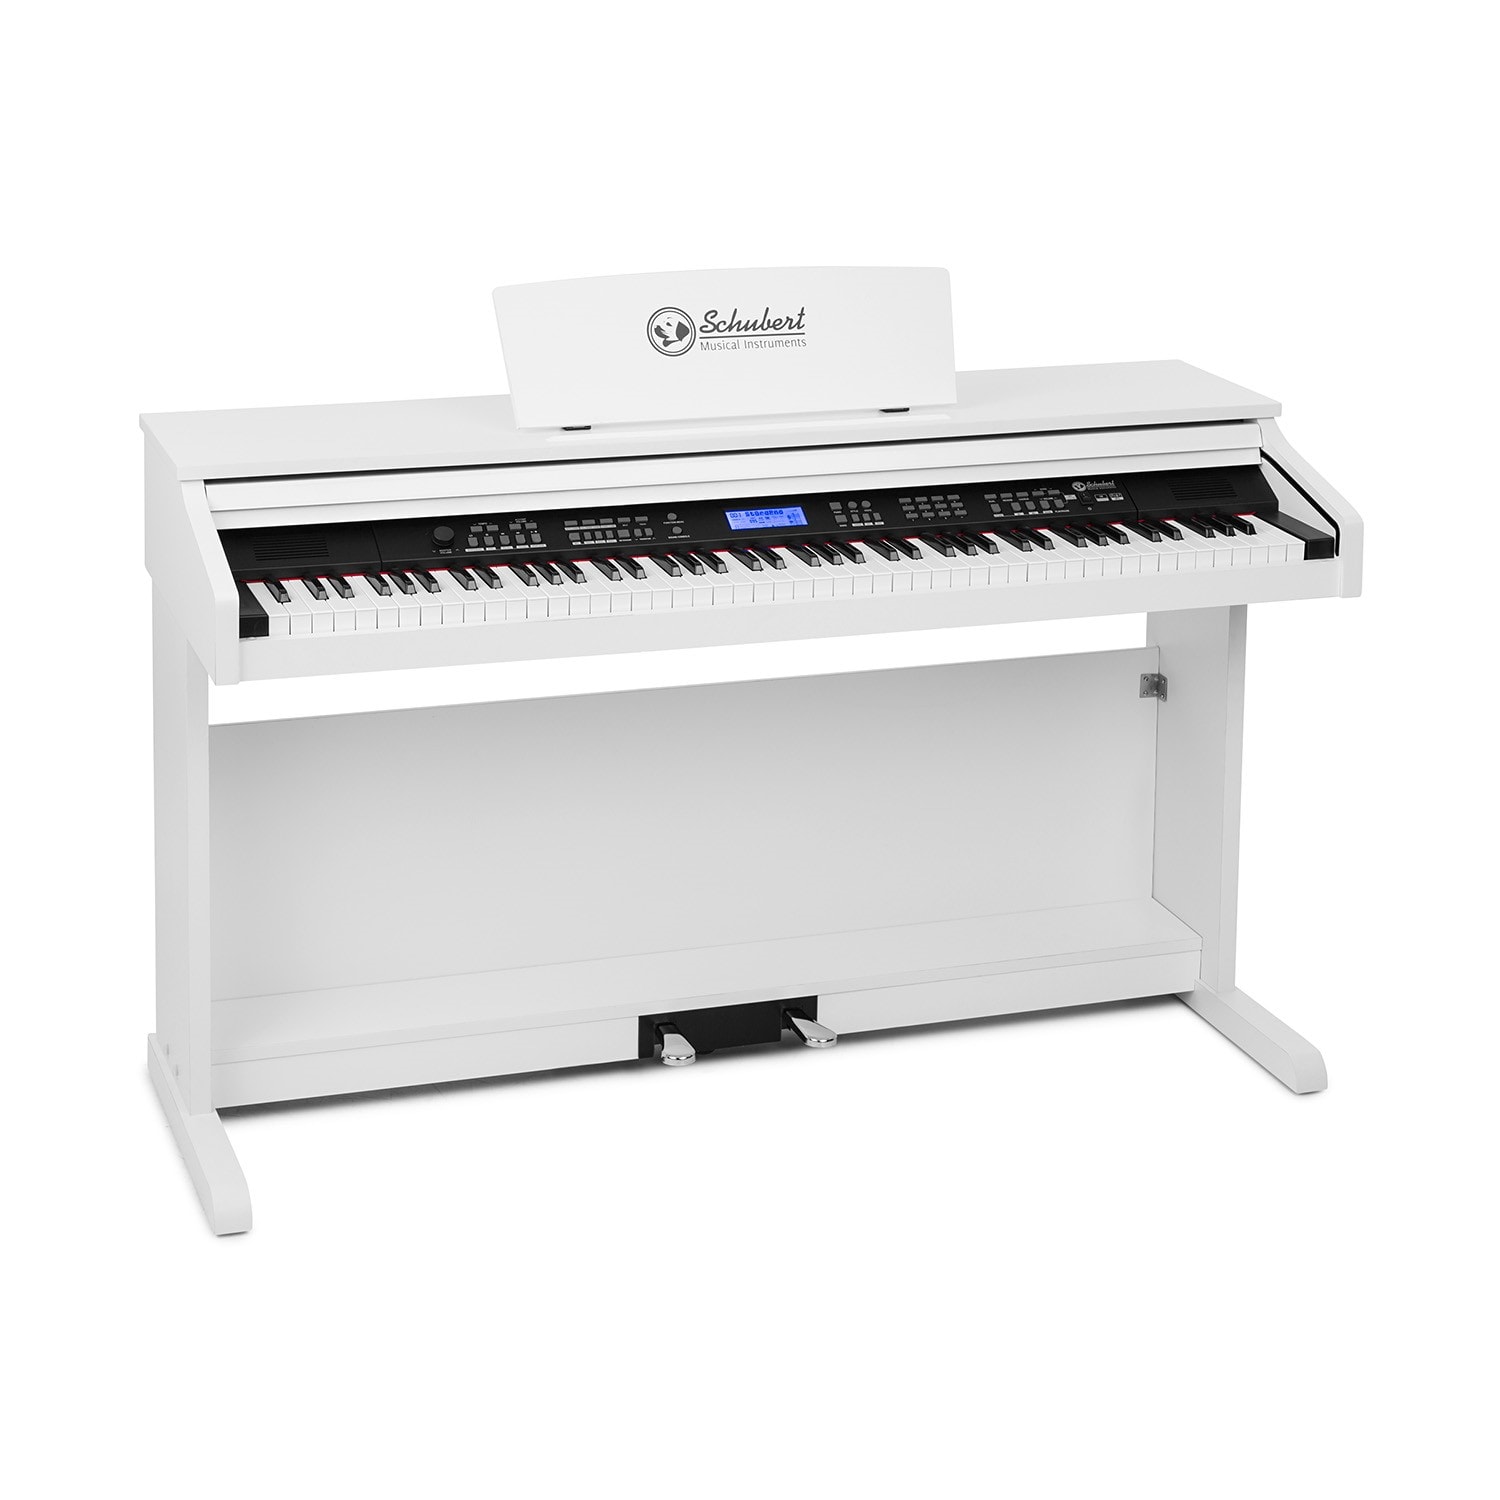 Schubert subi 88 mk ii clavier musical 88 touches midi usb - piano